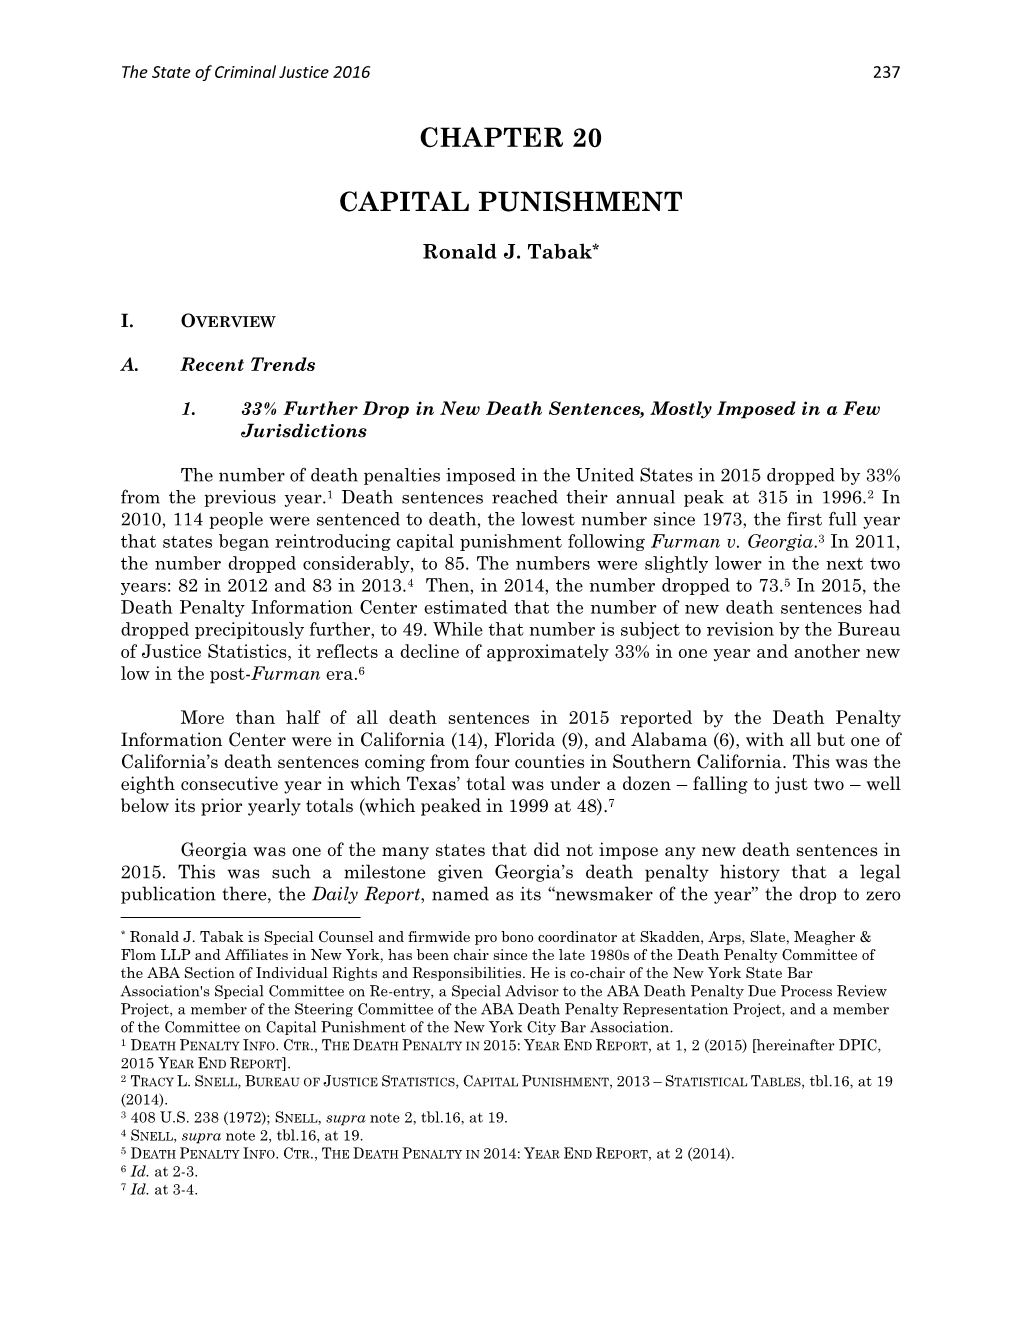 Chapter 20 Capital Punishment